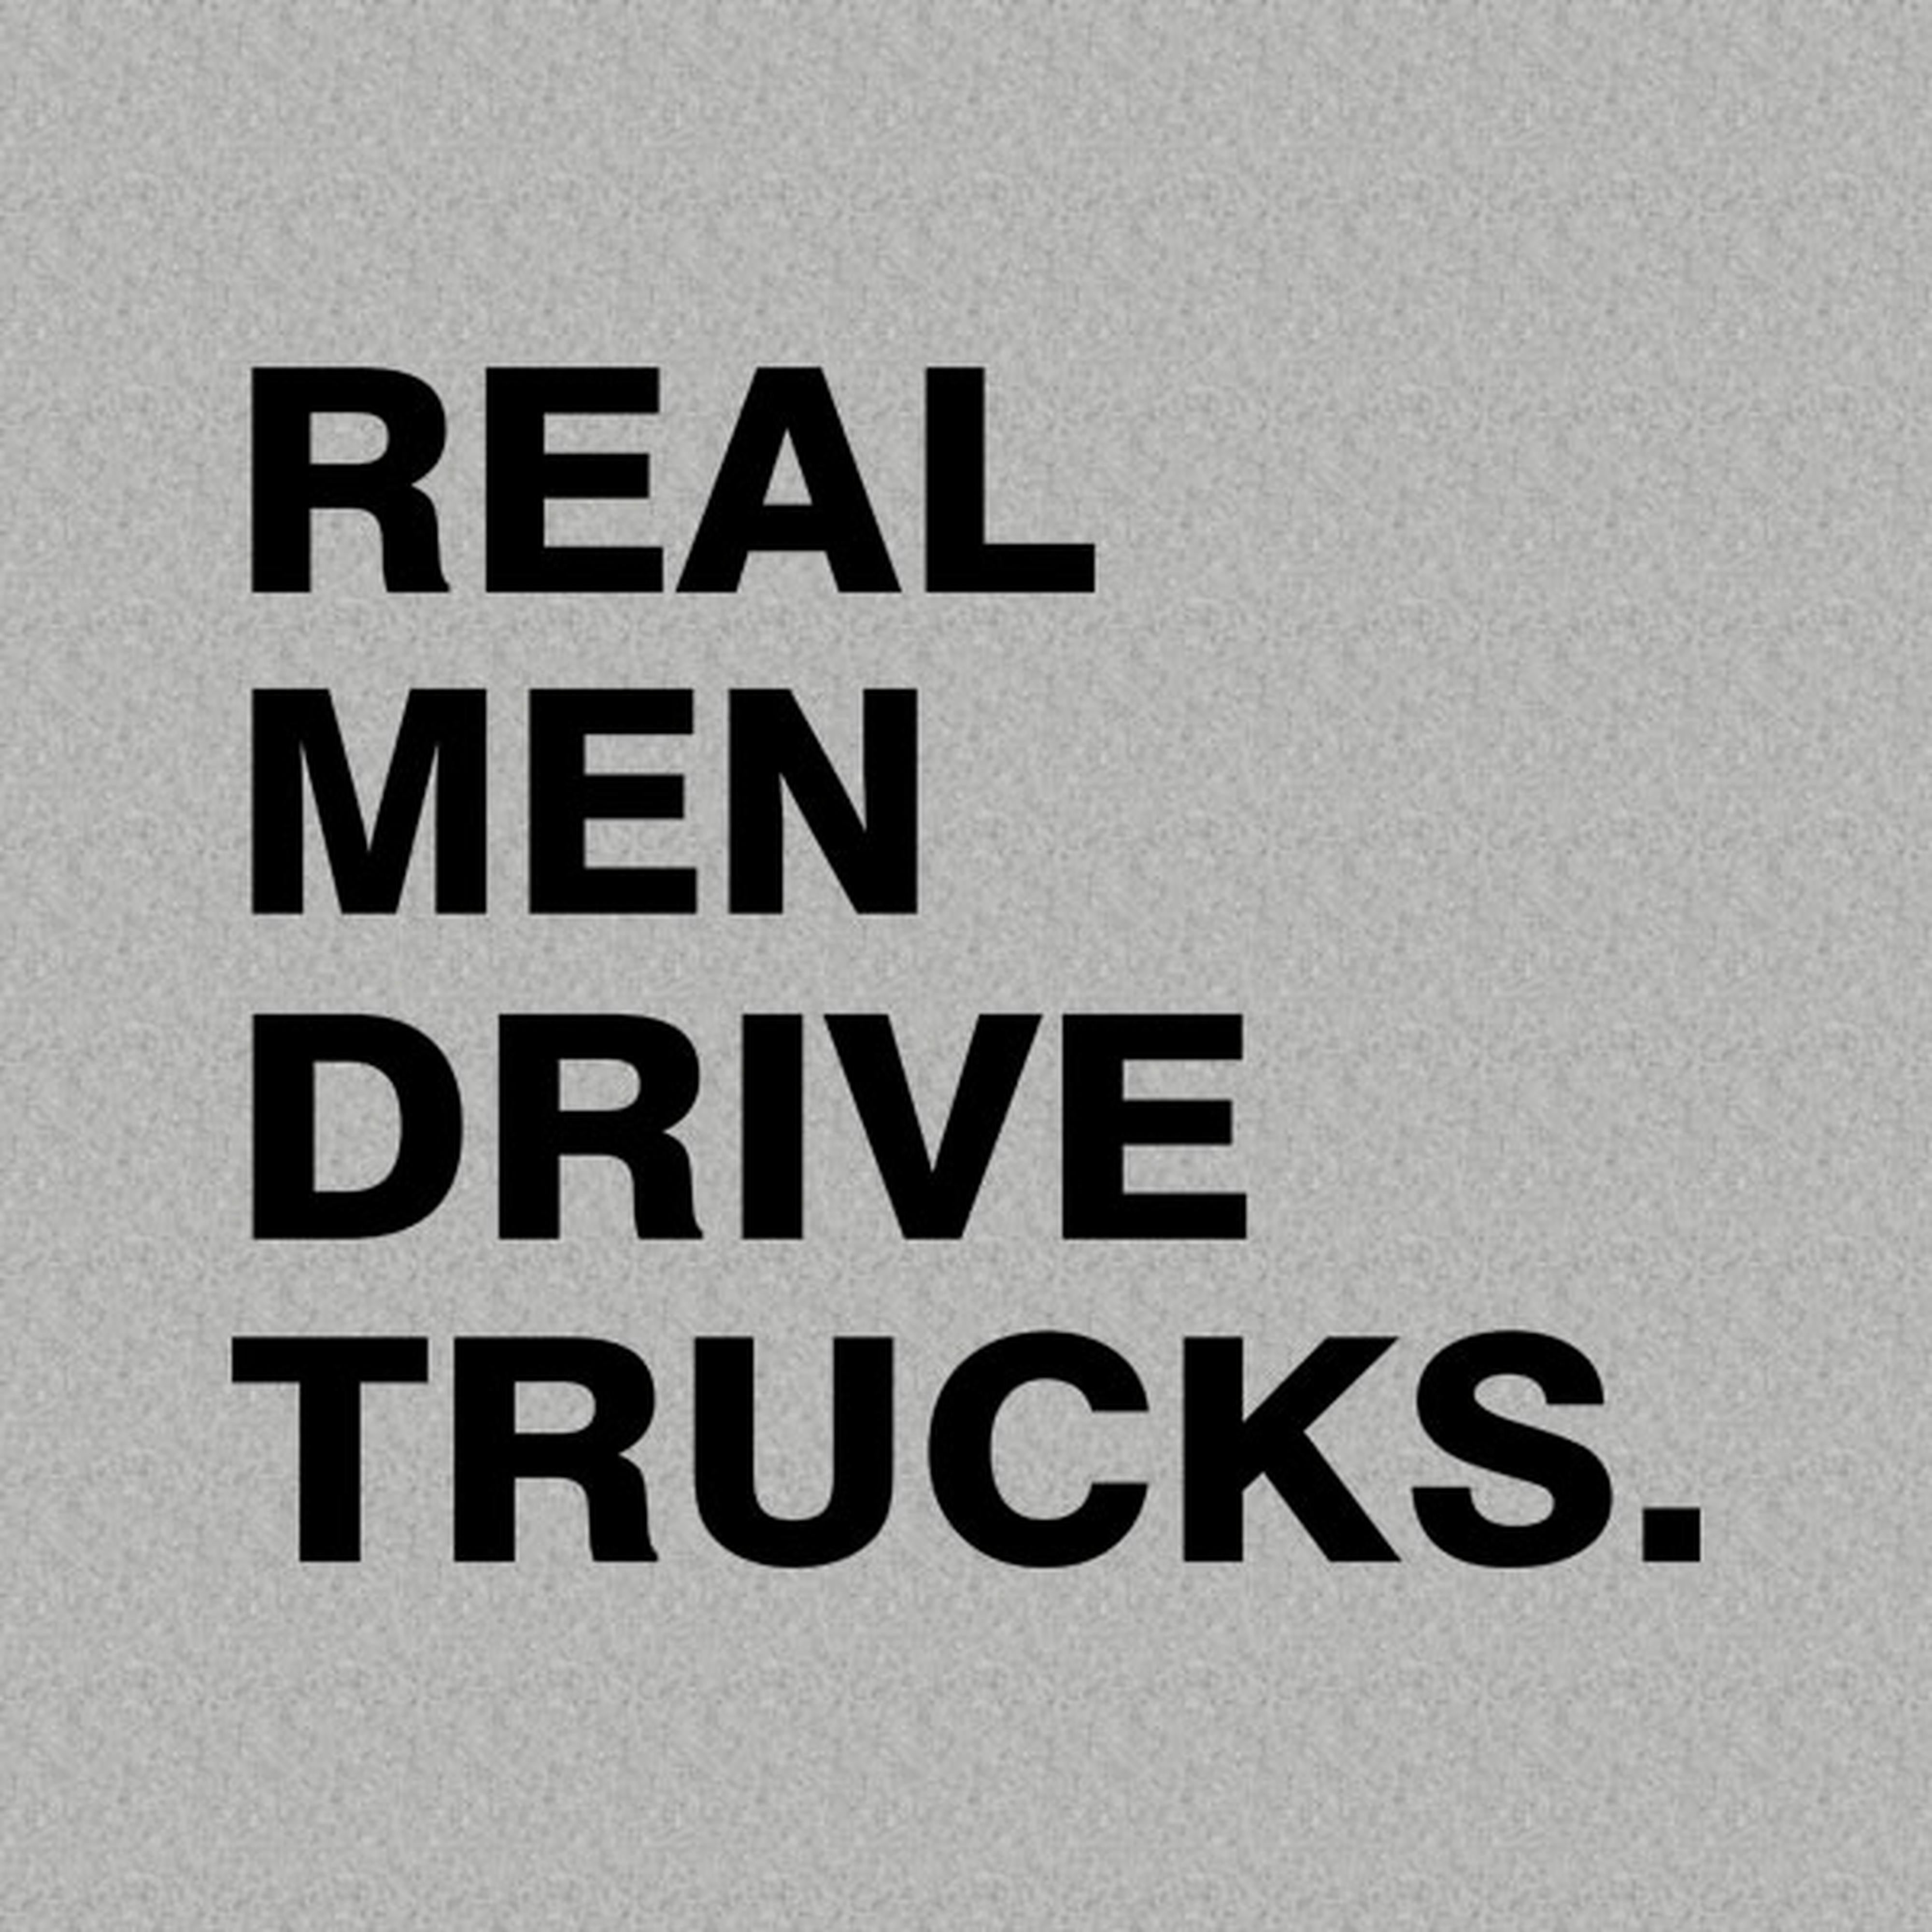 Real men drive trucks - T-shirt